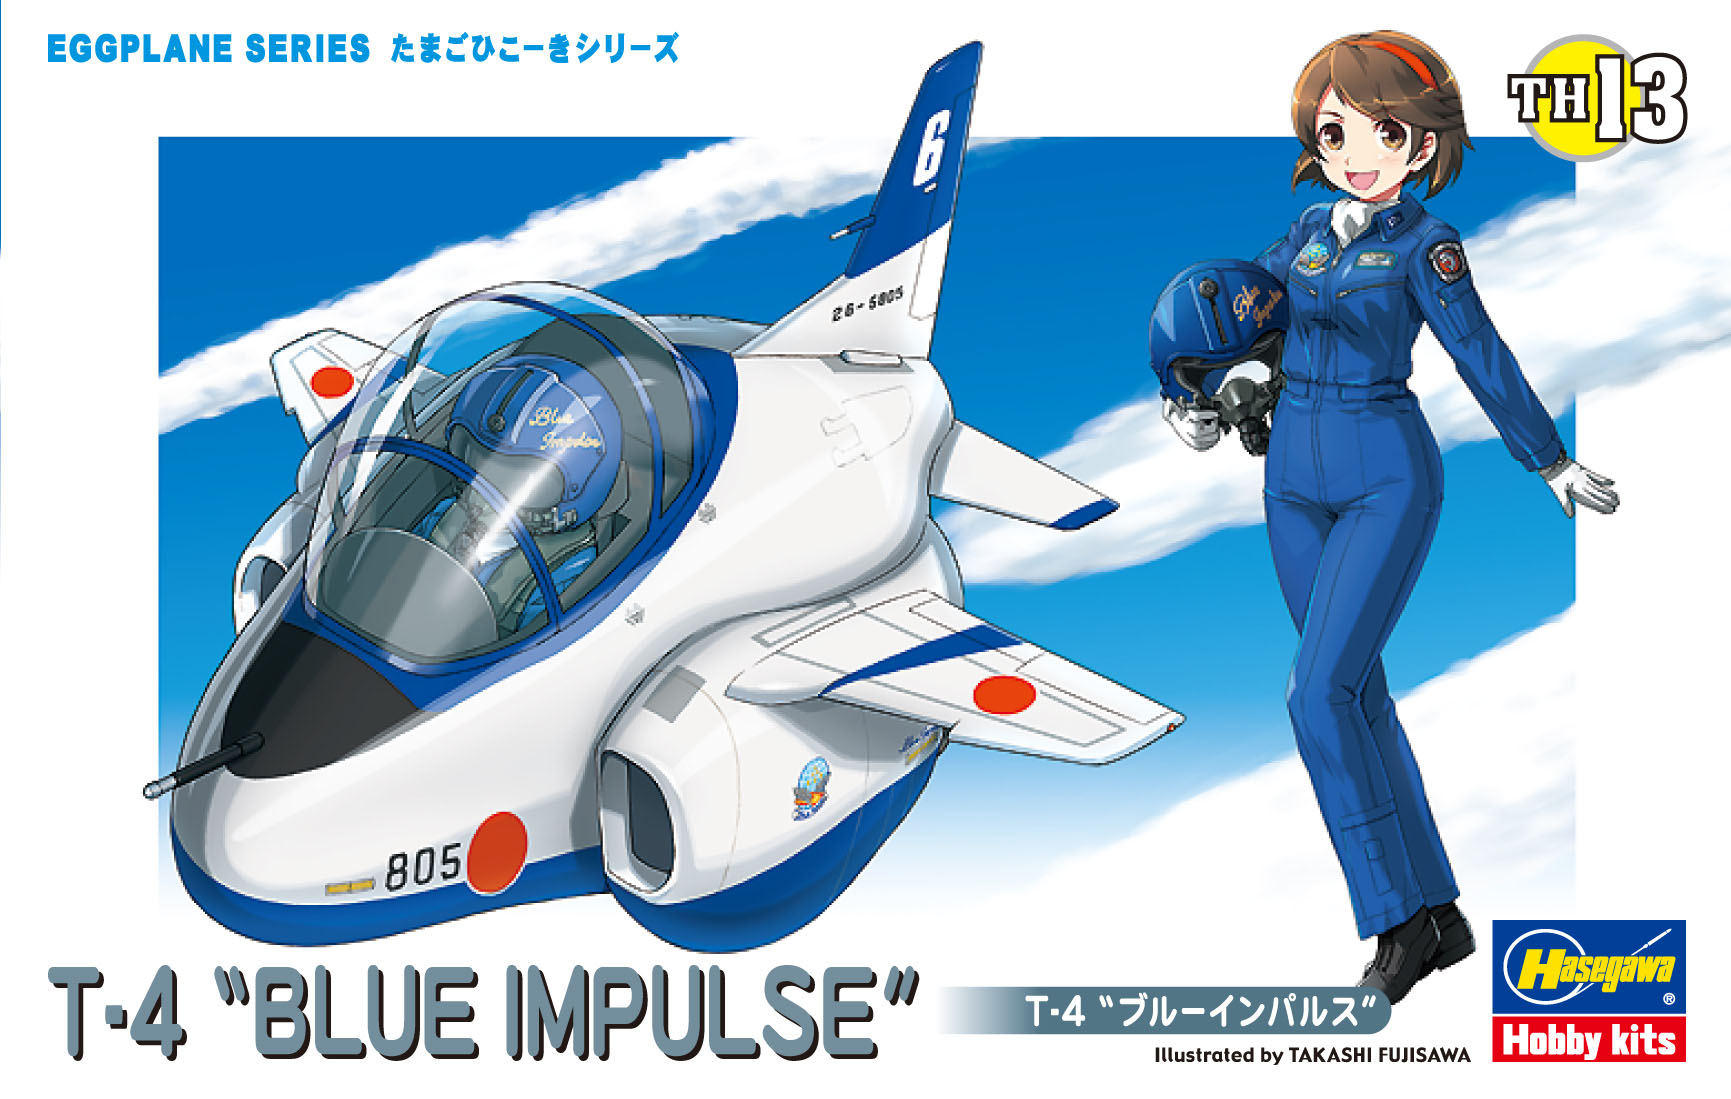 Eggplane: T-4 "Blue Impulse" 